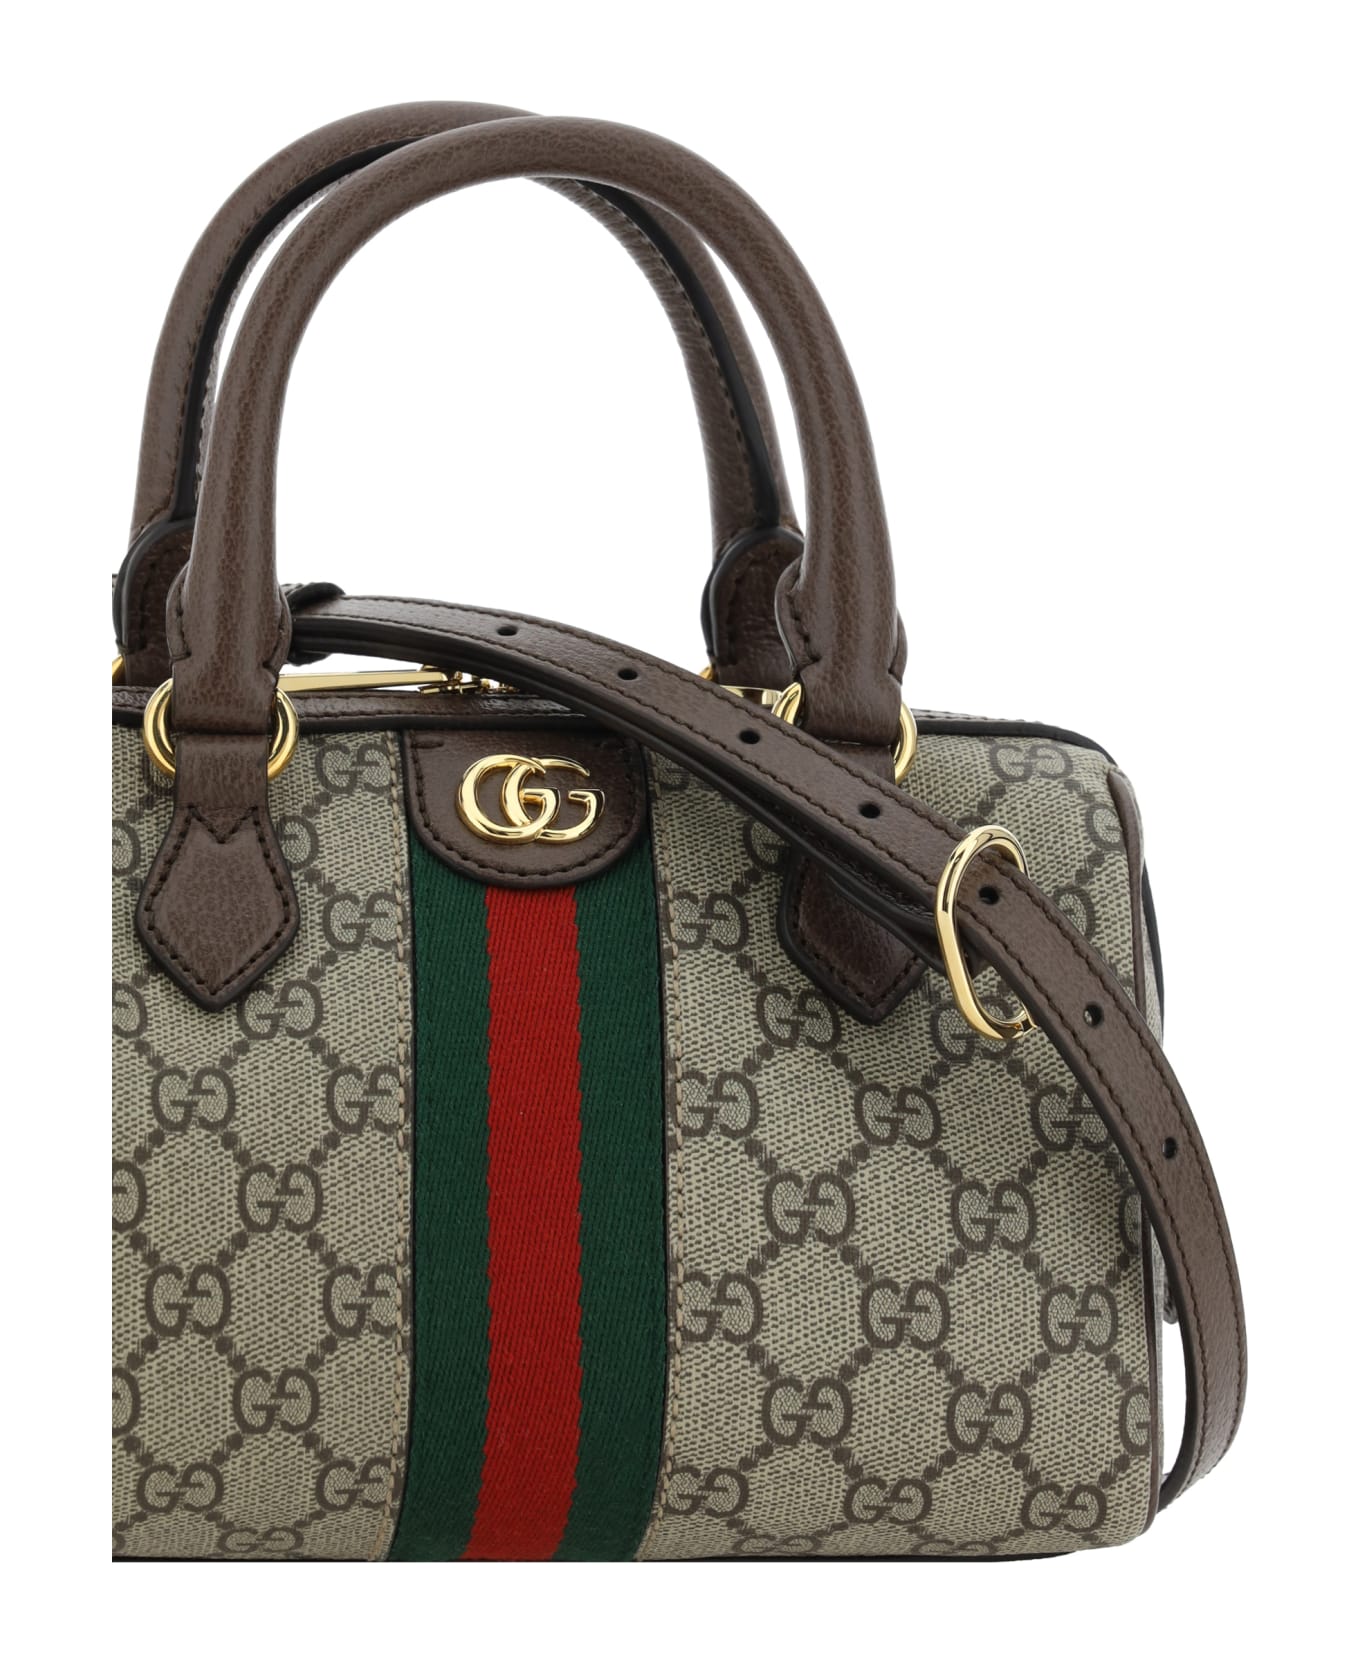 Gucci Ophidia Handbag - Acero